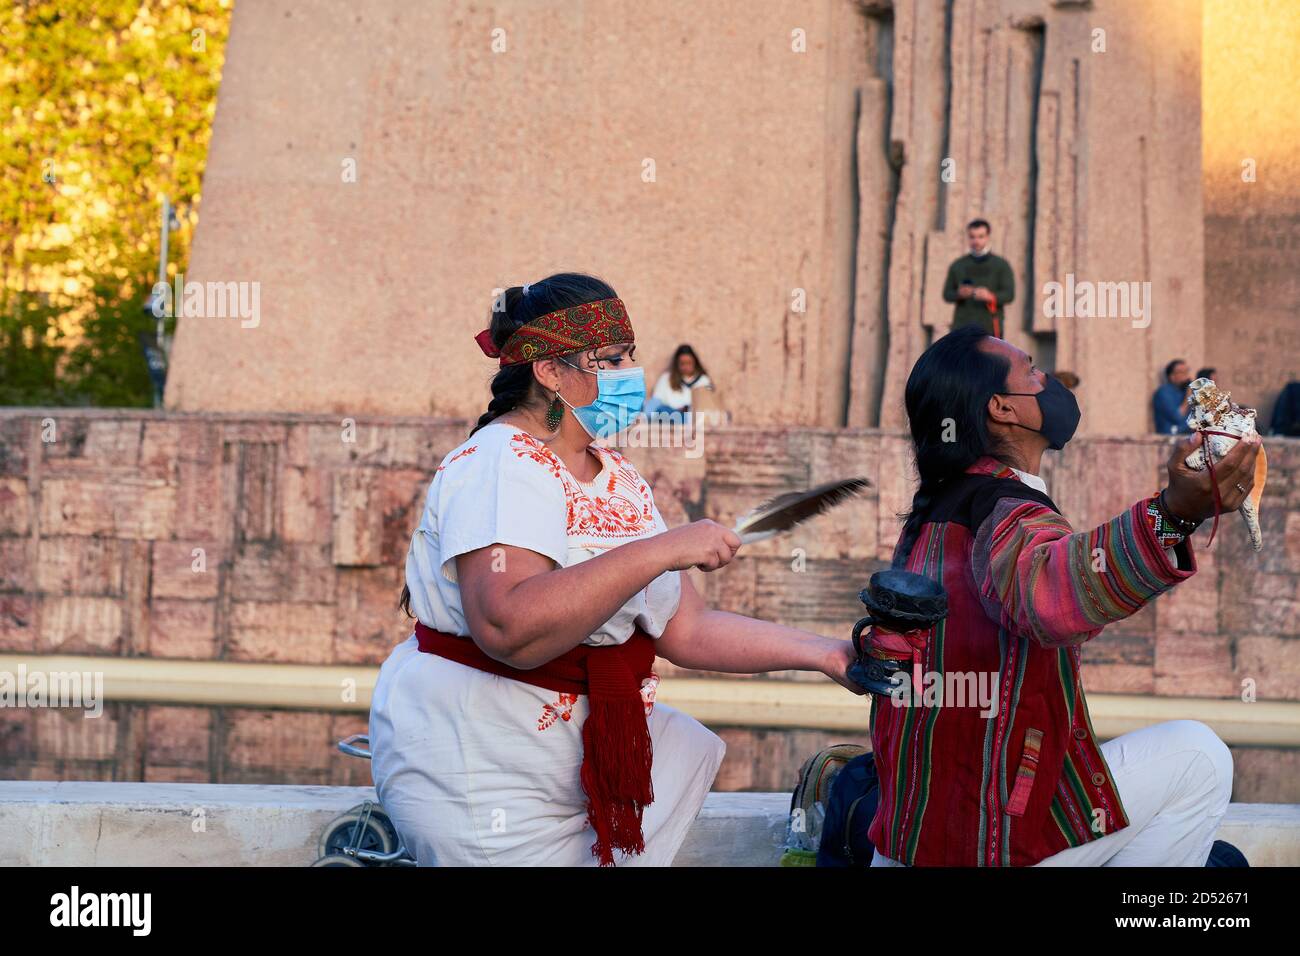 Performing a south american native purification ritual, Plaza Colon, Dia Nacional de España, Dia de la Hispanidad, protest, Madrid, Spain, October 12 Stock Photo